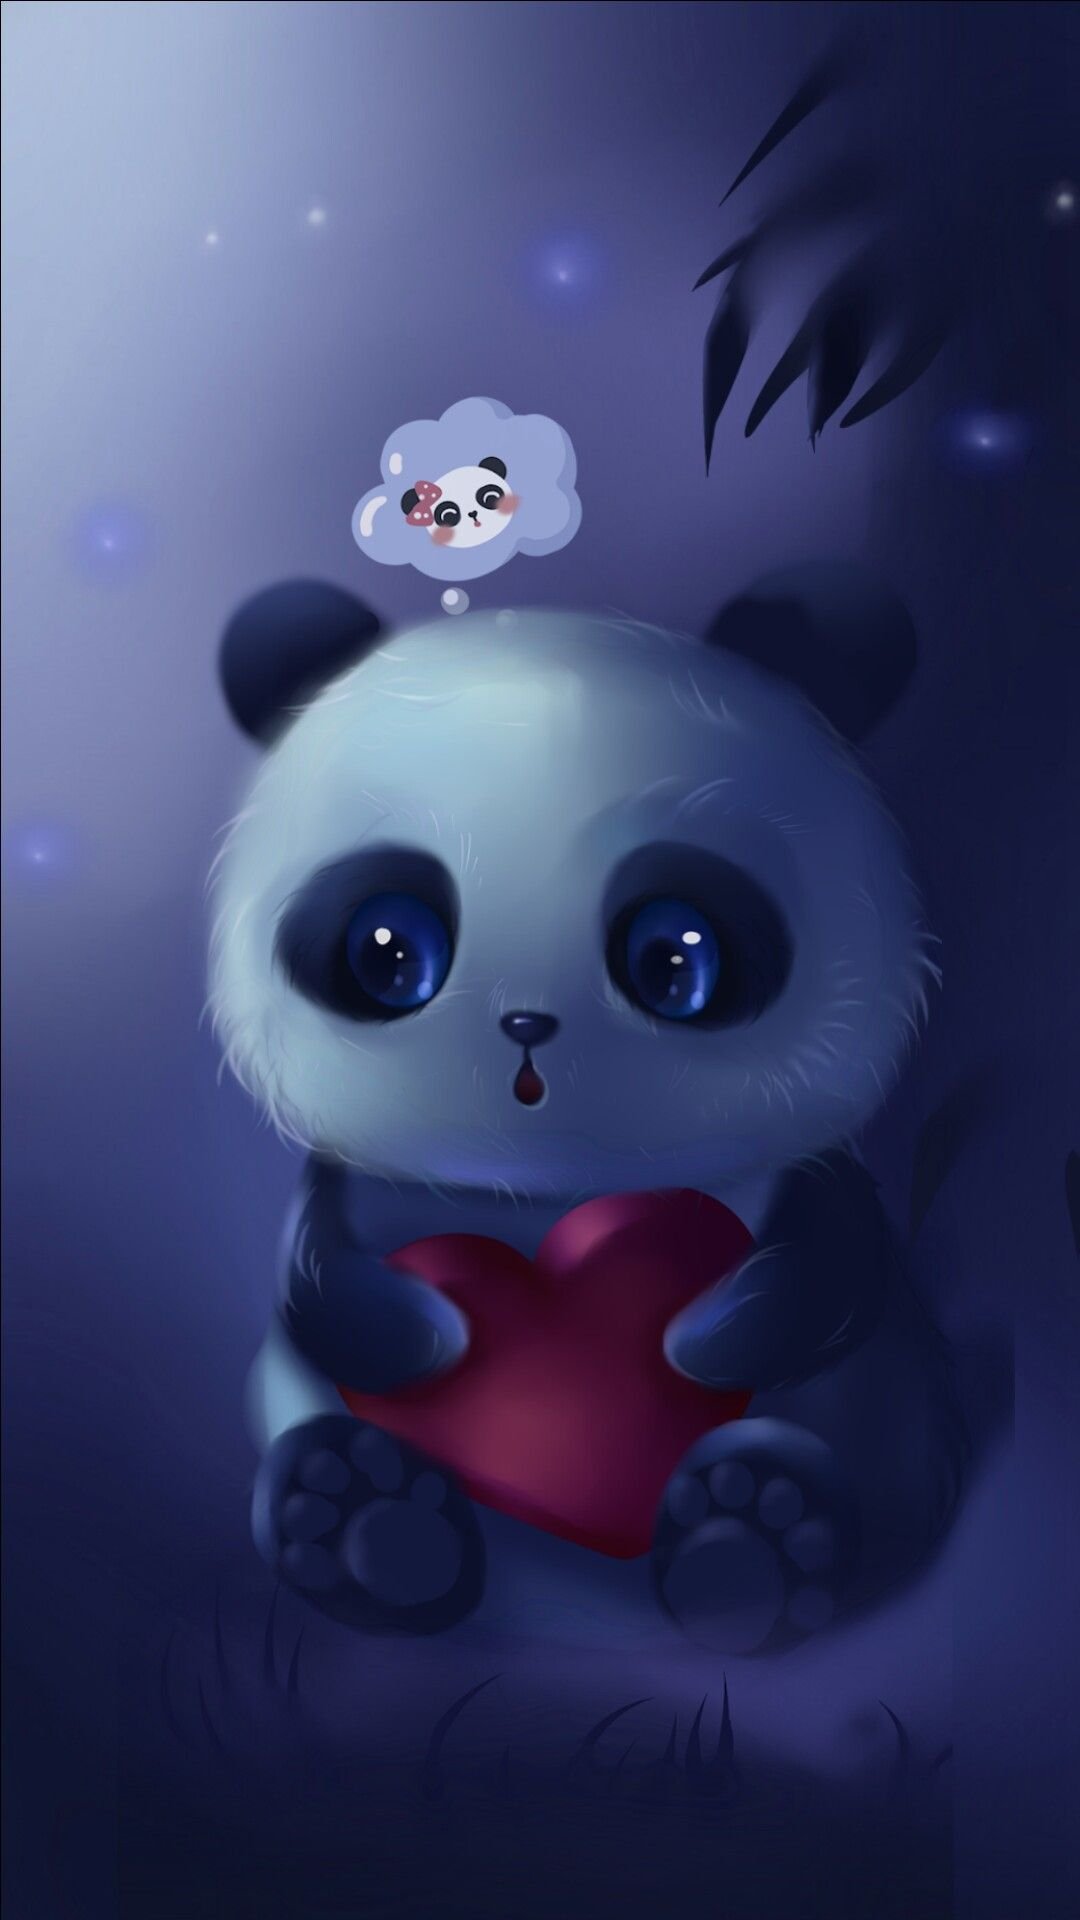 Lexica - Anime panda in space, beautiful, 8k, hyper realistic